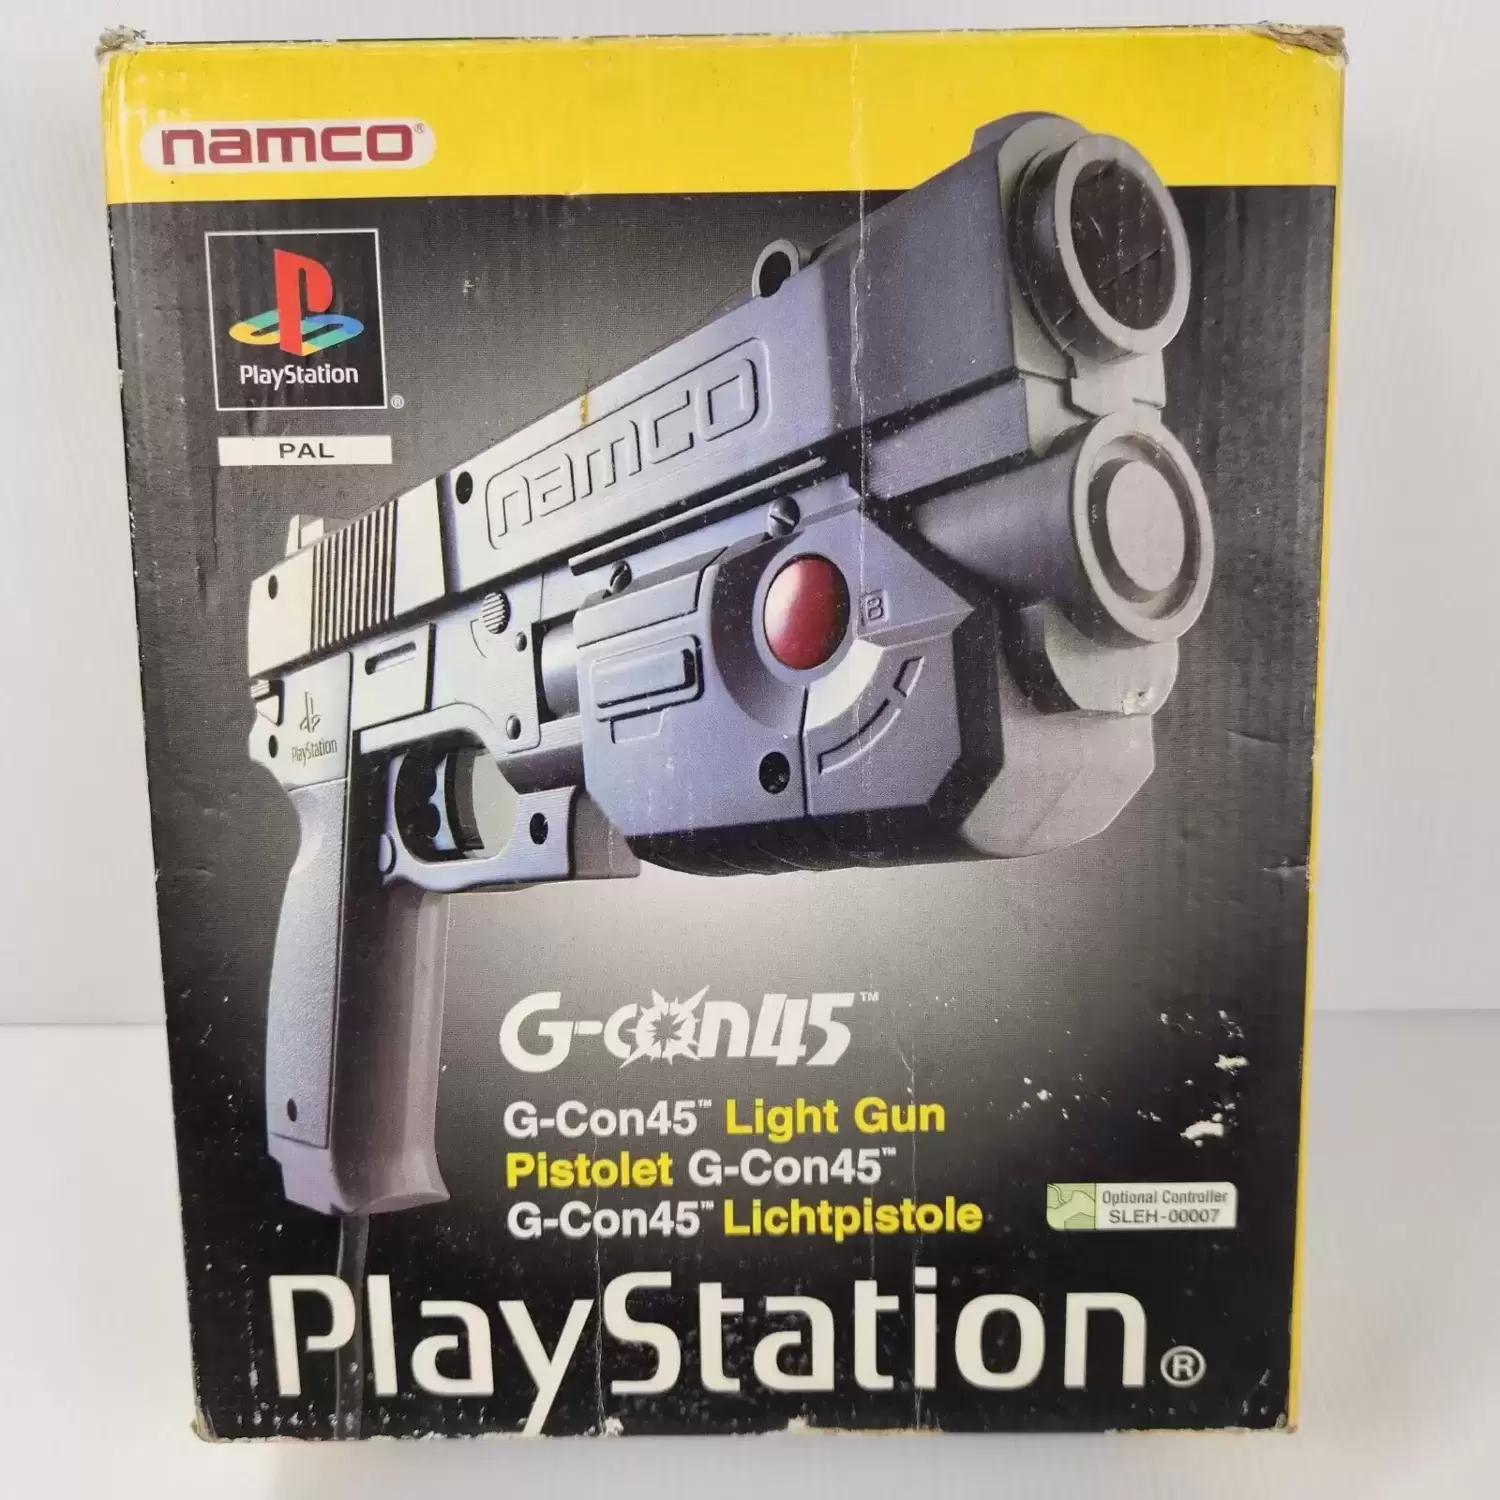 PlayStation material - NAMCO G-Con45 Light Gun